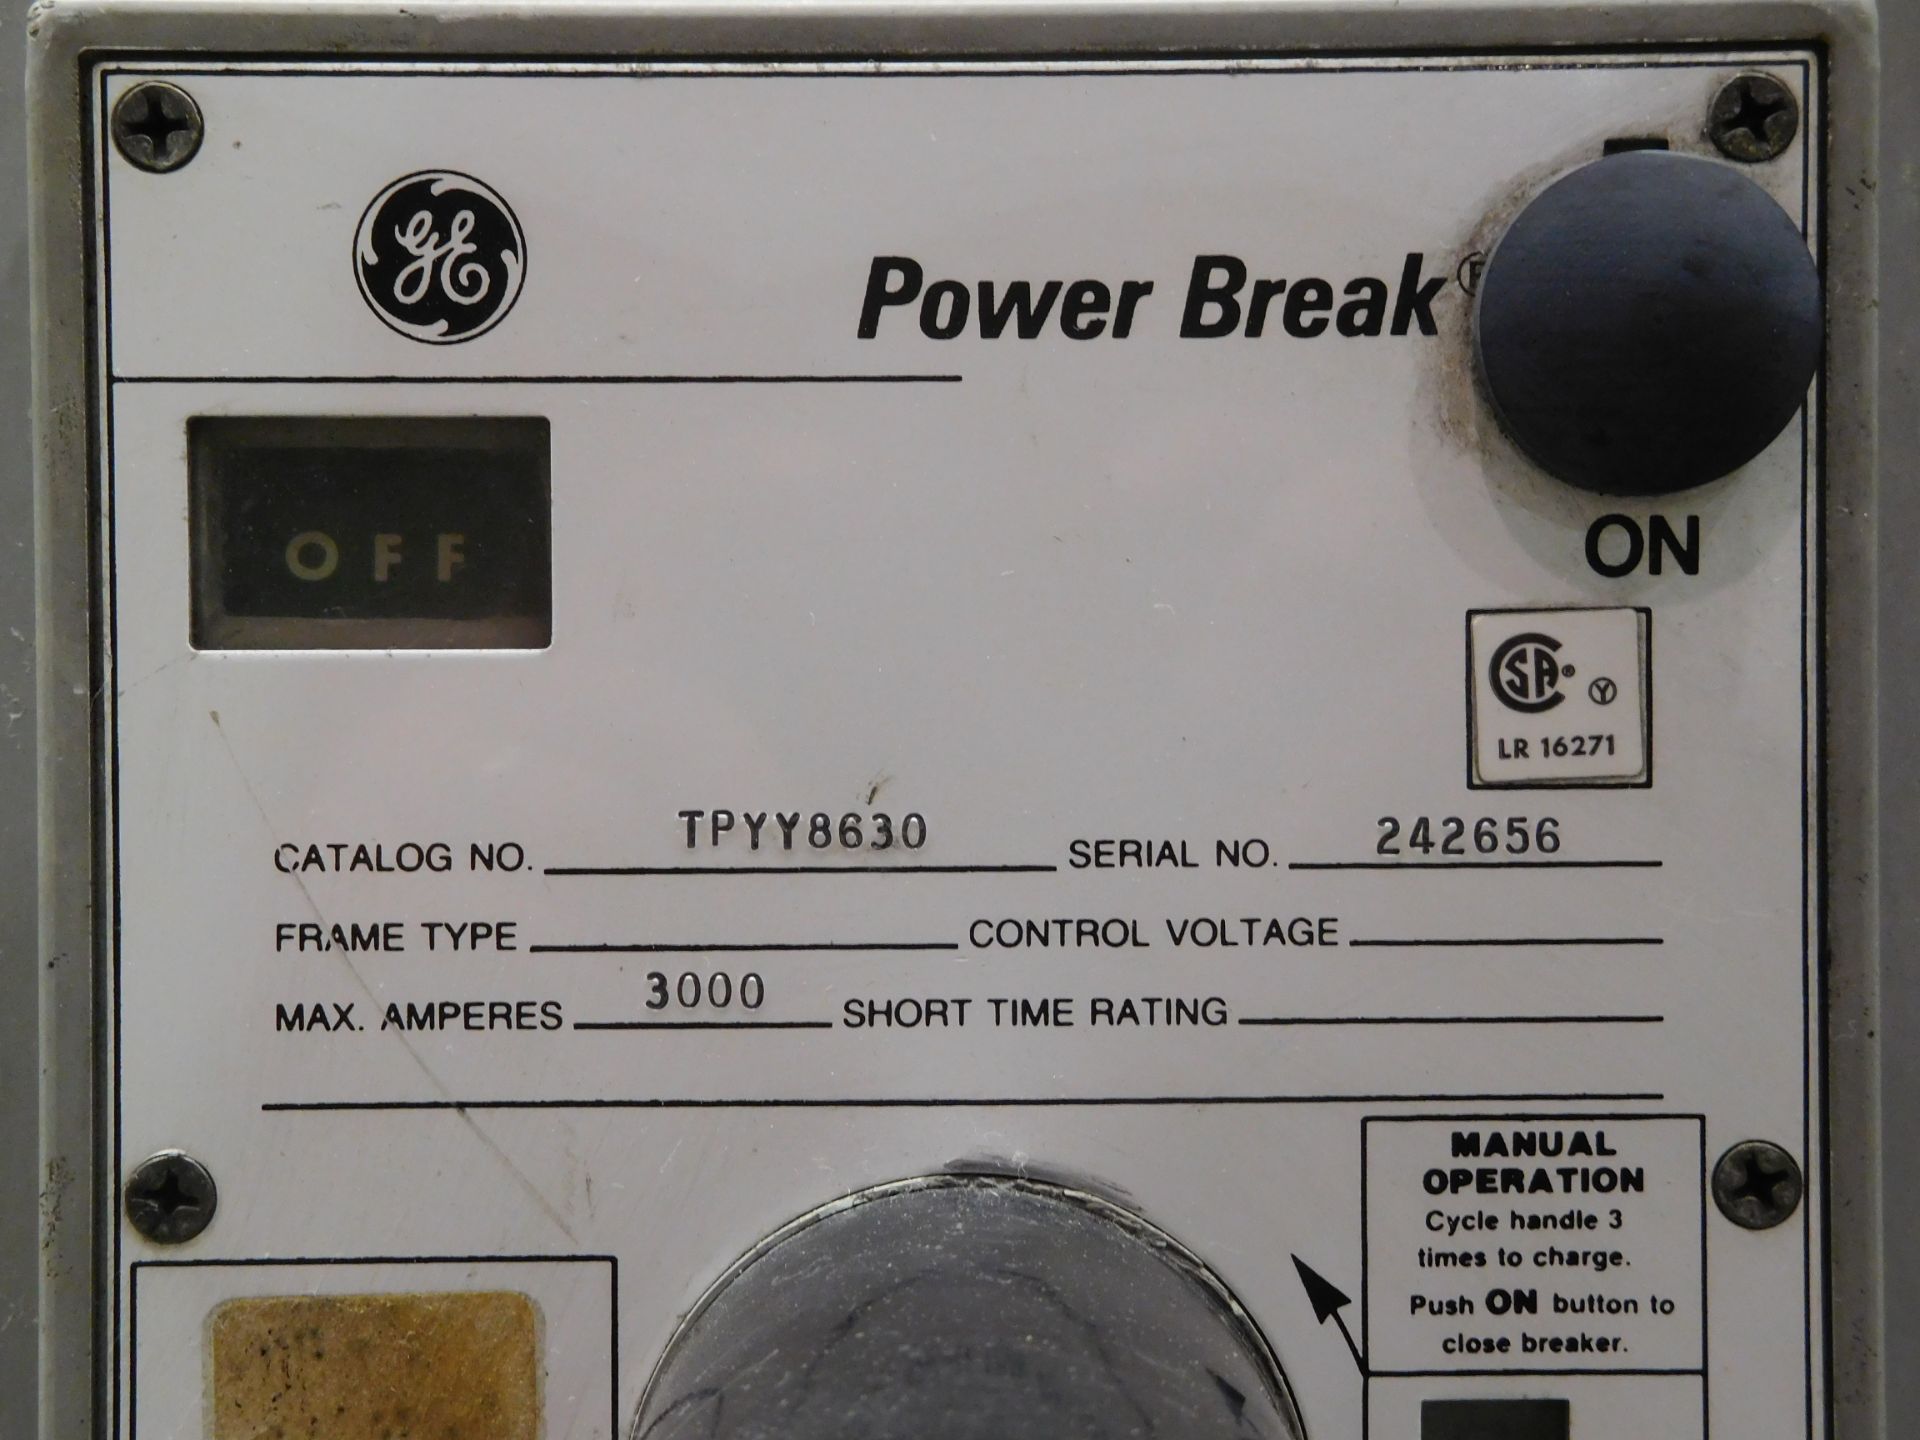 GE TPYY8630 Power Break 3000 Amp Circuit Breaker - Image 2 of 7